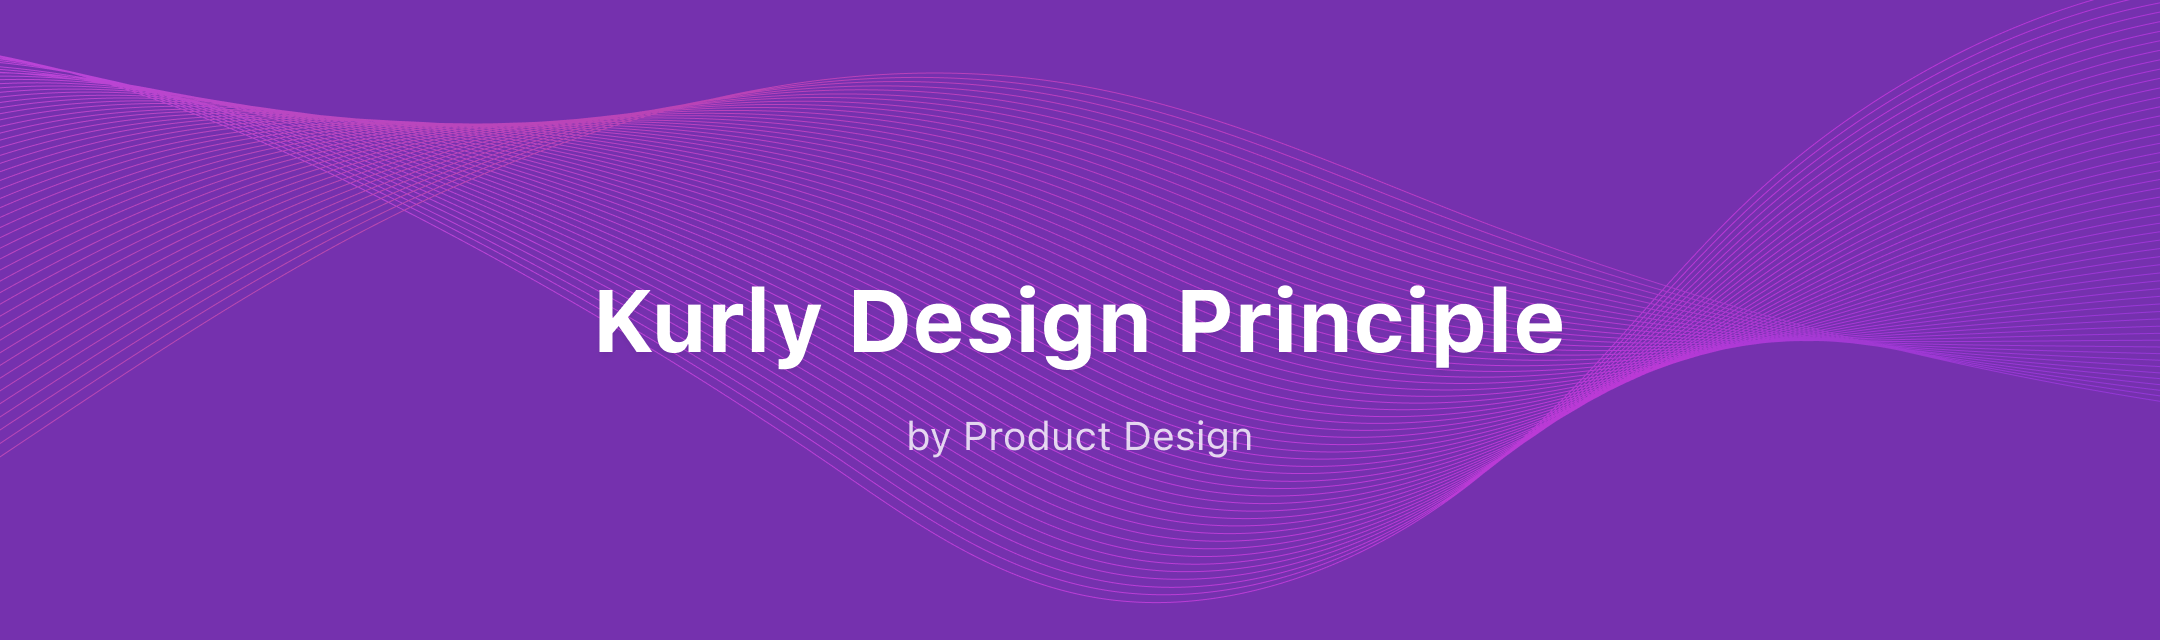 Kurly Design Principle